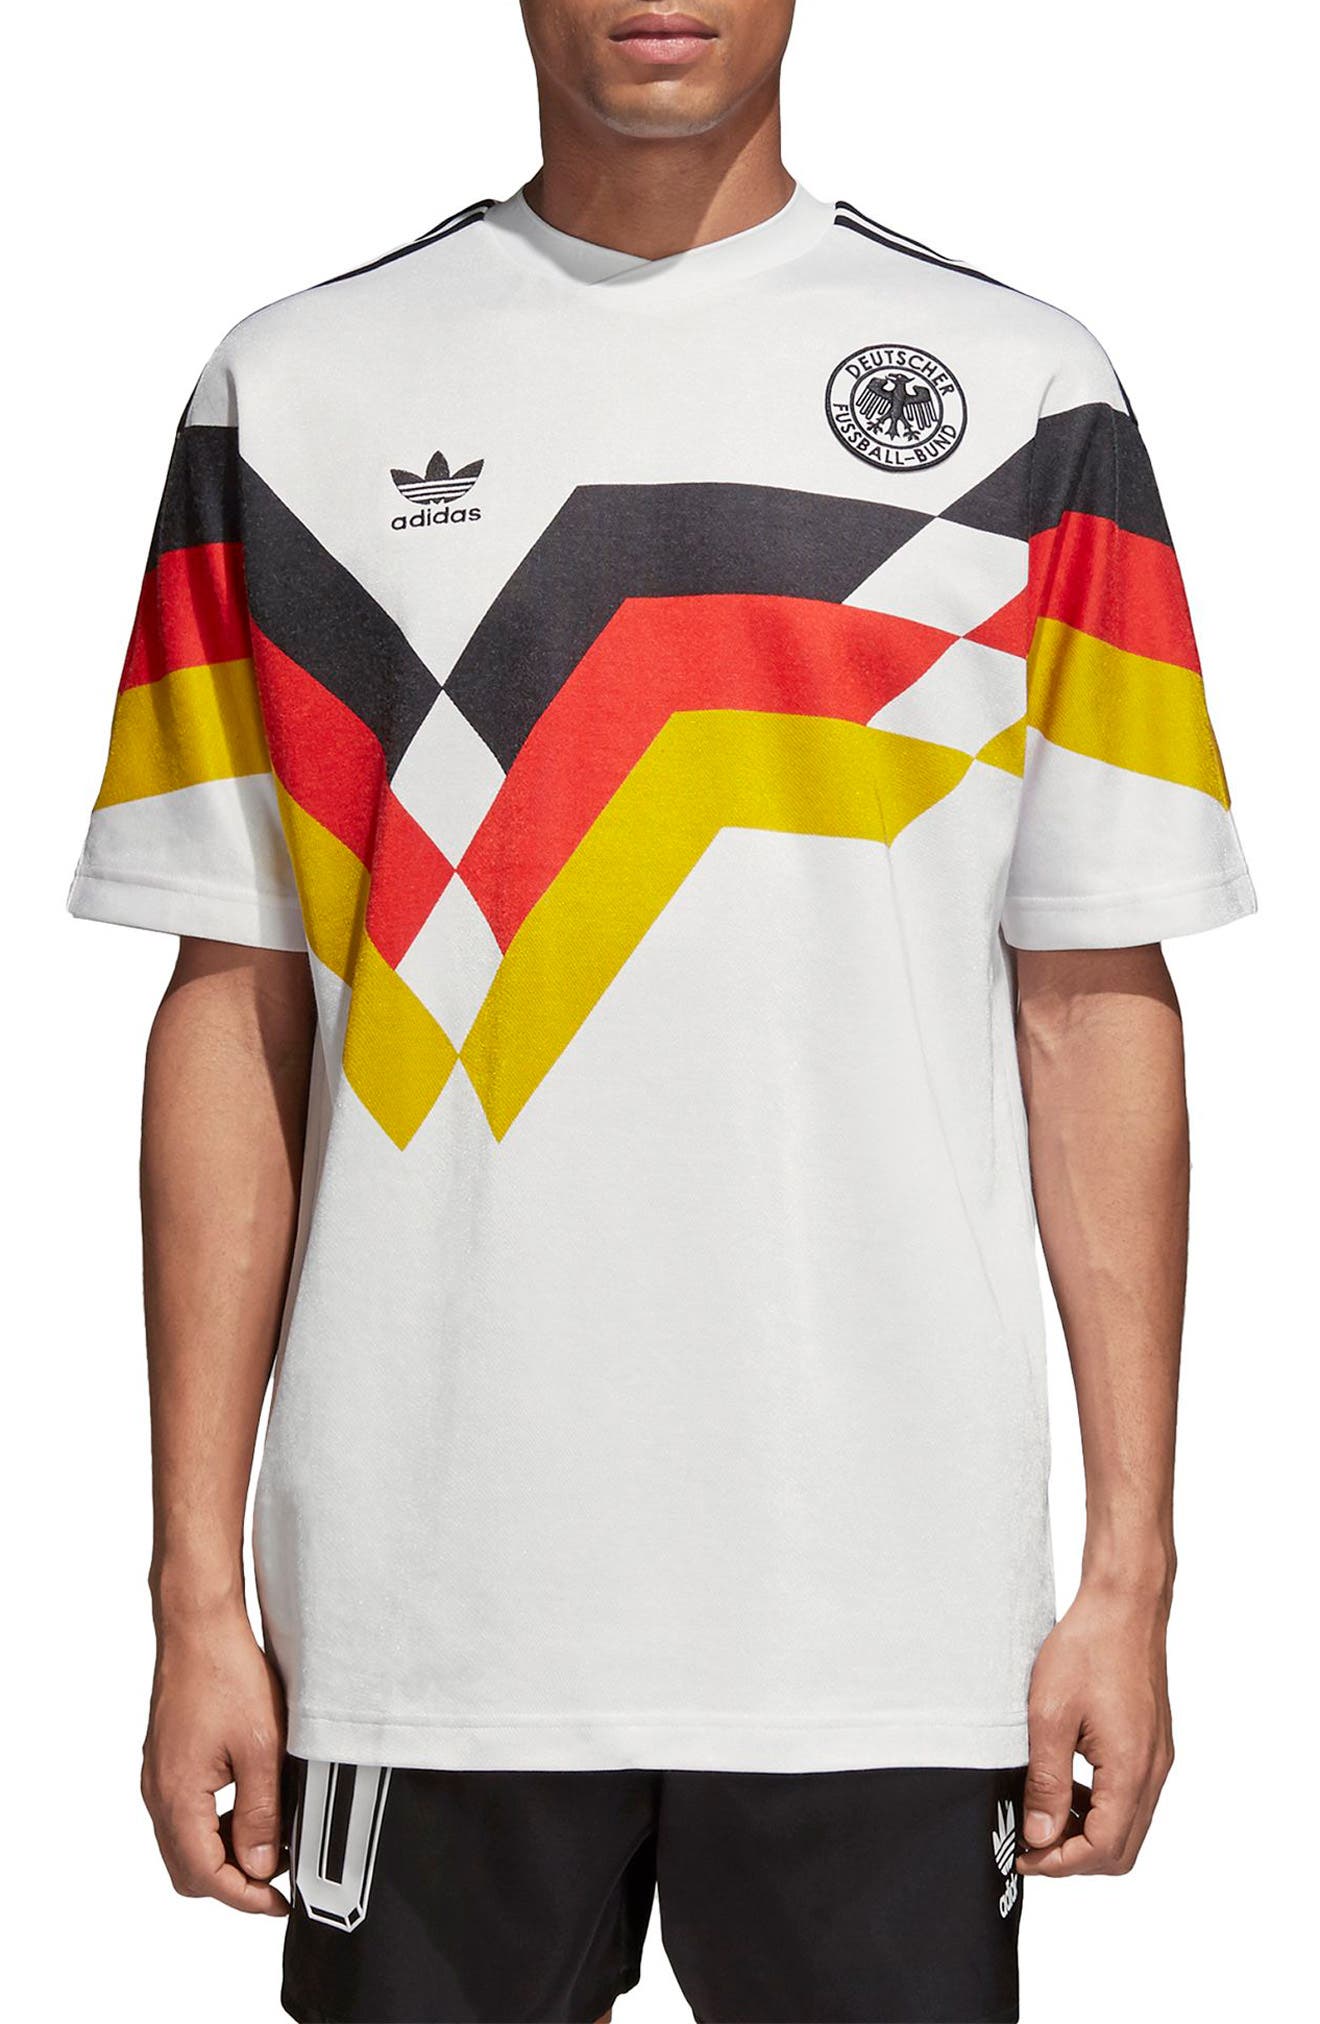 adidas originals soccer jersey